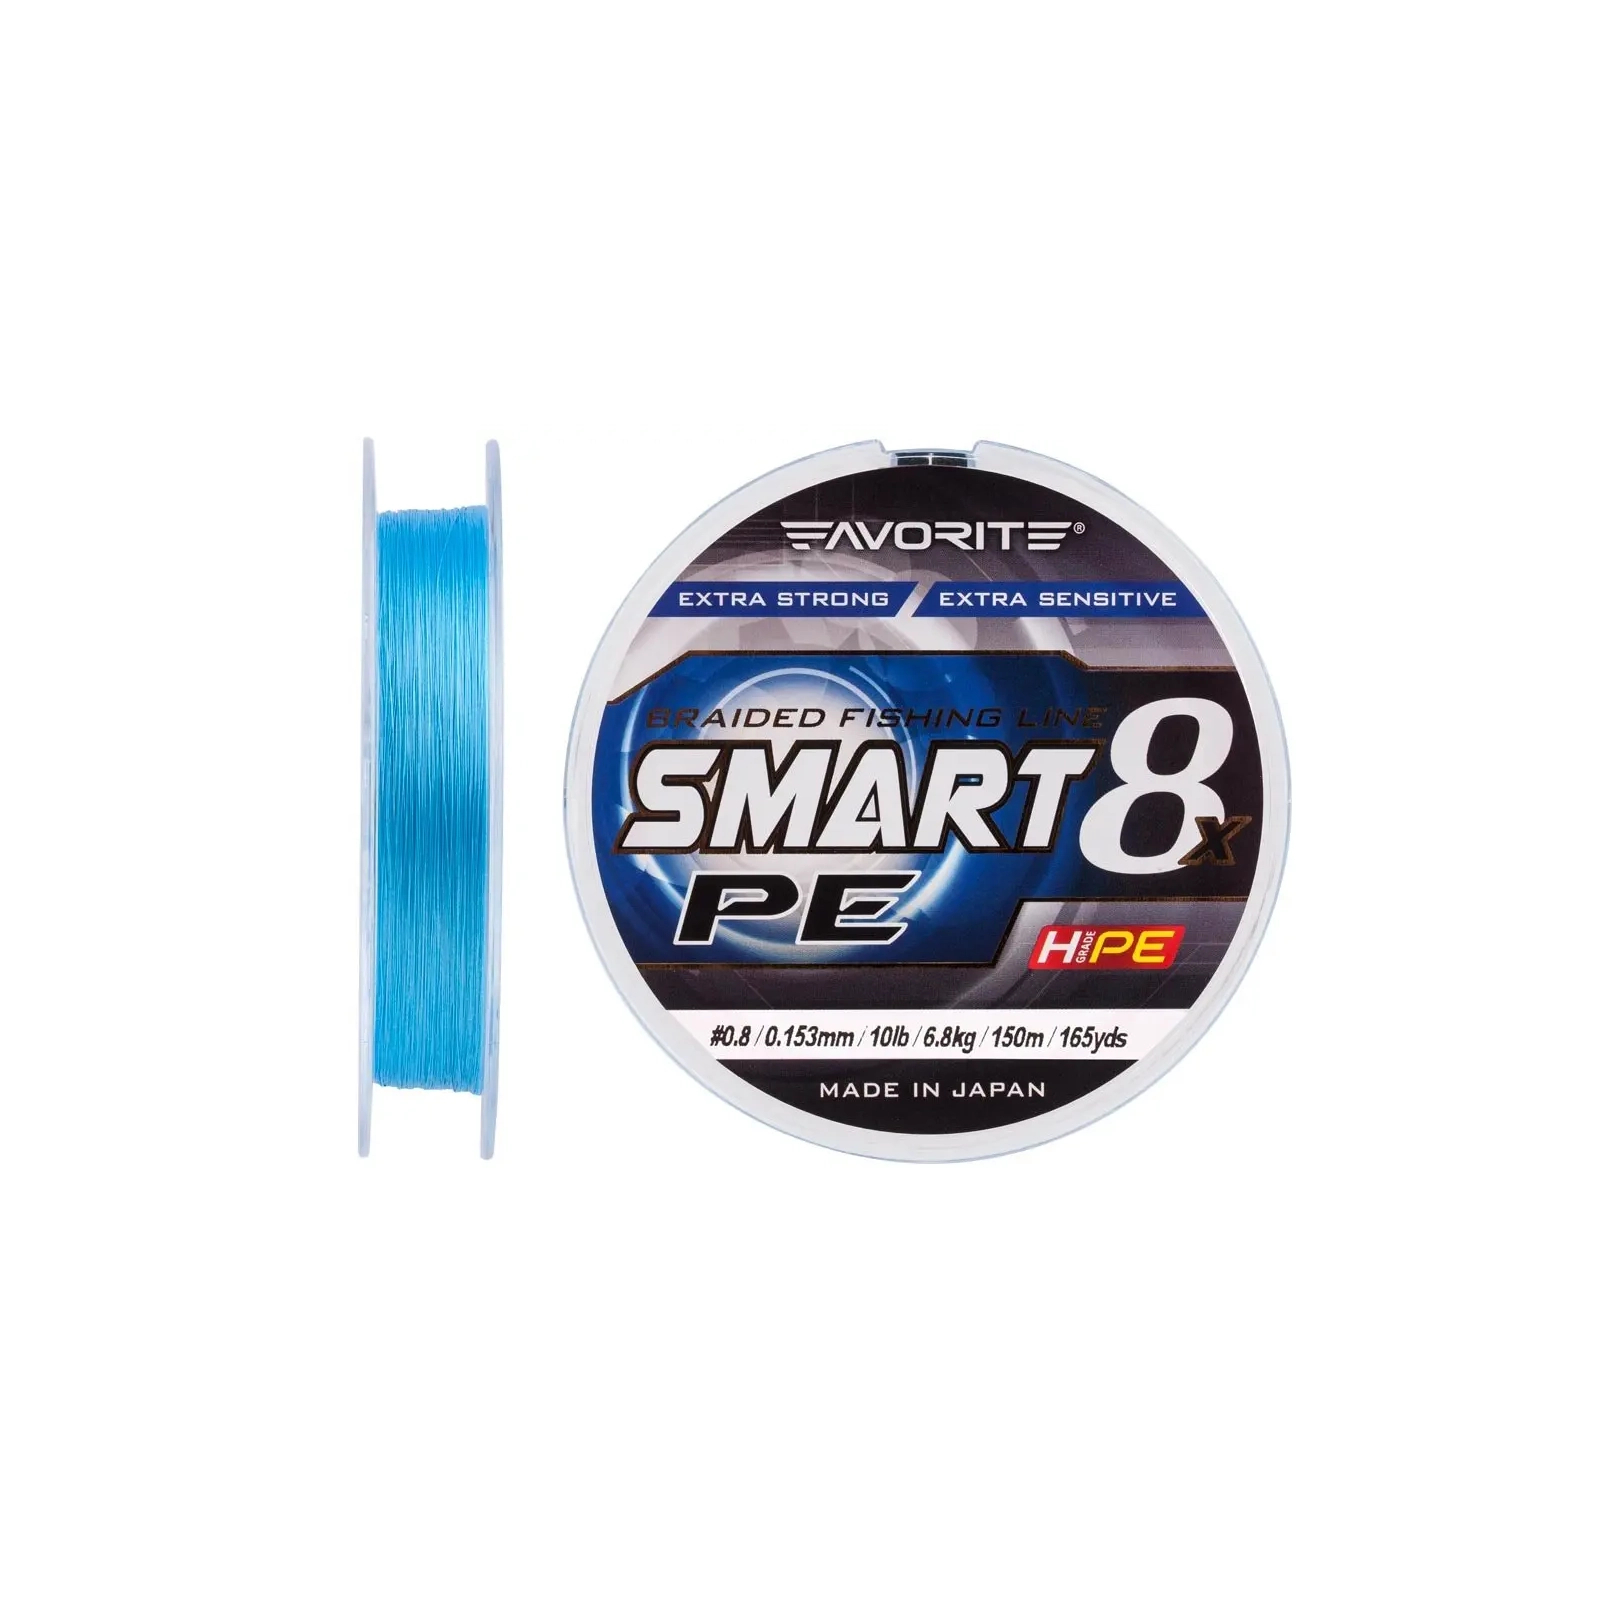 Шнур Favorite Smart PE 8x 150м 0.8/0.153mm 10lb/6.8kg Sky Blue (1693.10.72) изображение 2